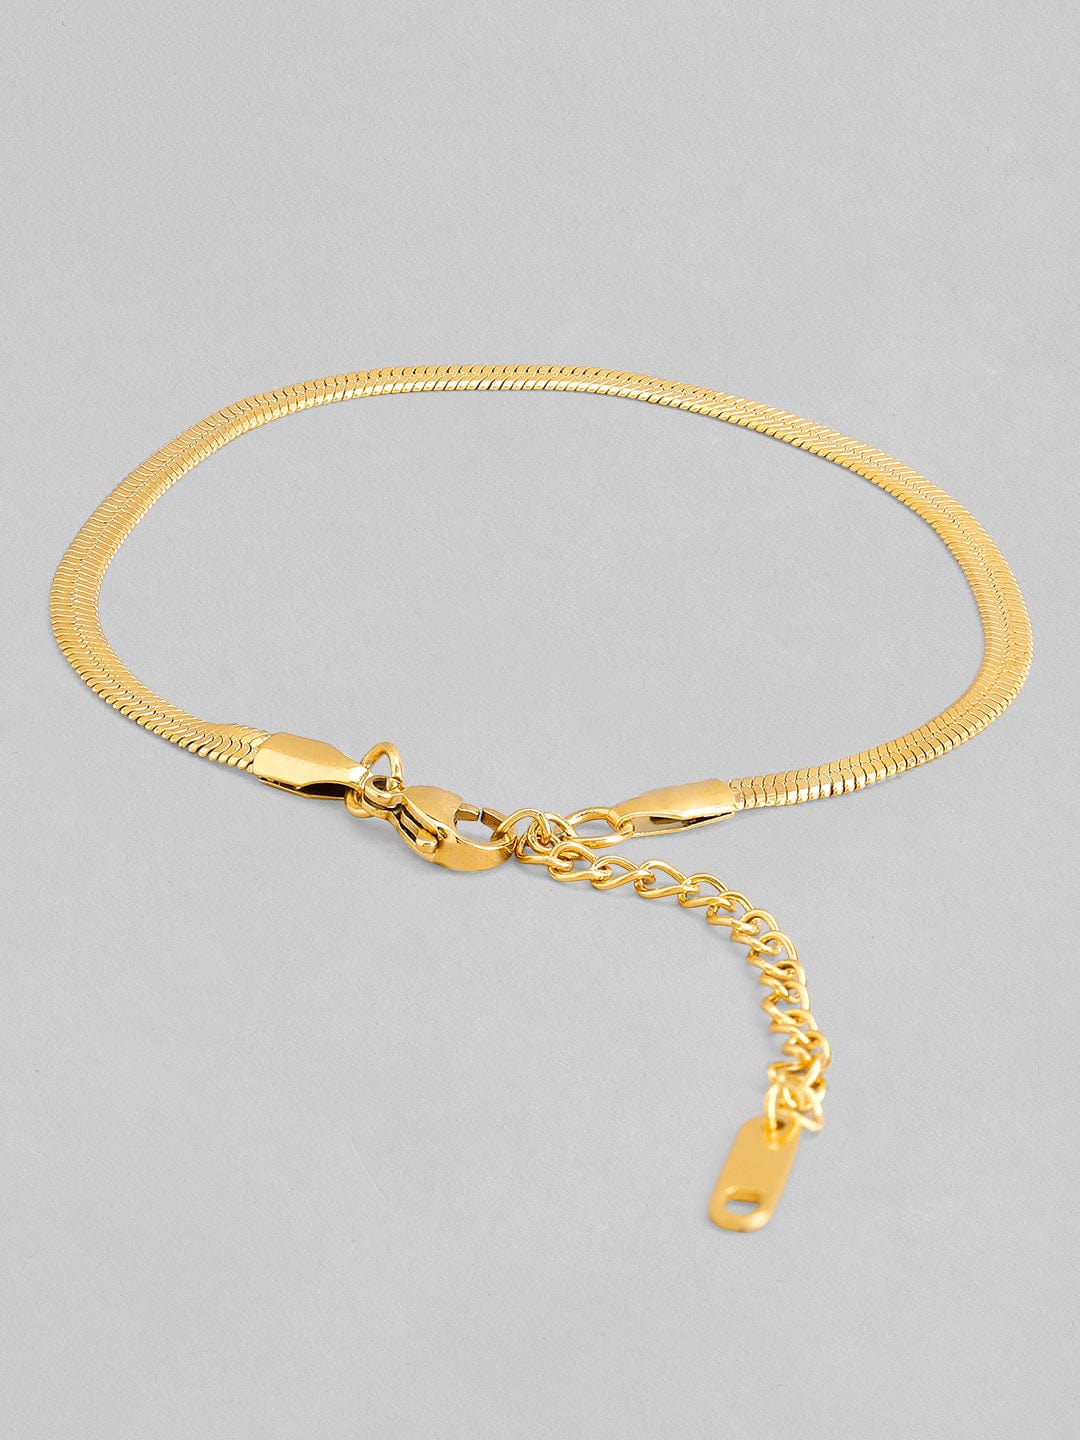 Tiny Cuban Chain Bracelet in 18K Gold Vermeil - MYKA